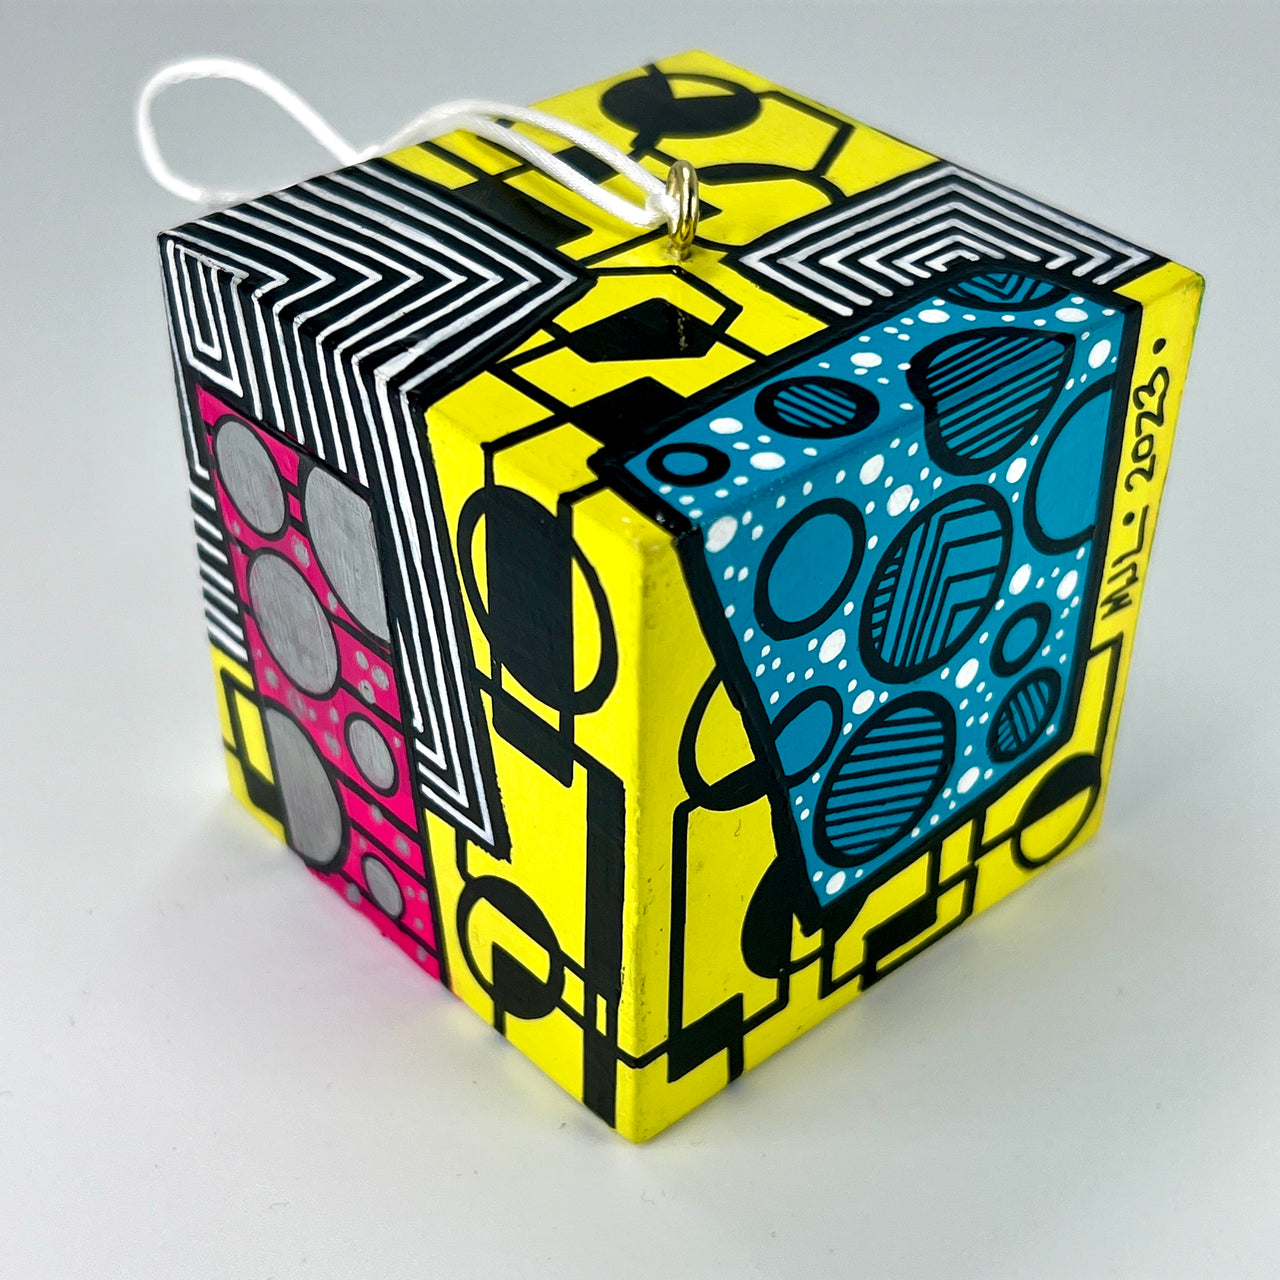 #15 - 3D Cube Art - 2.25" cube